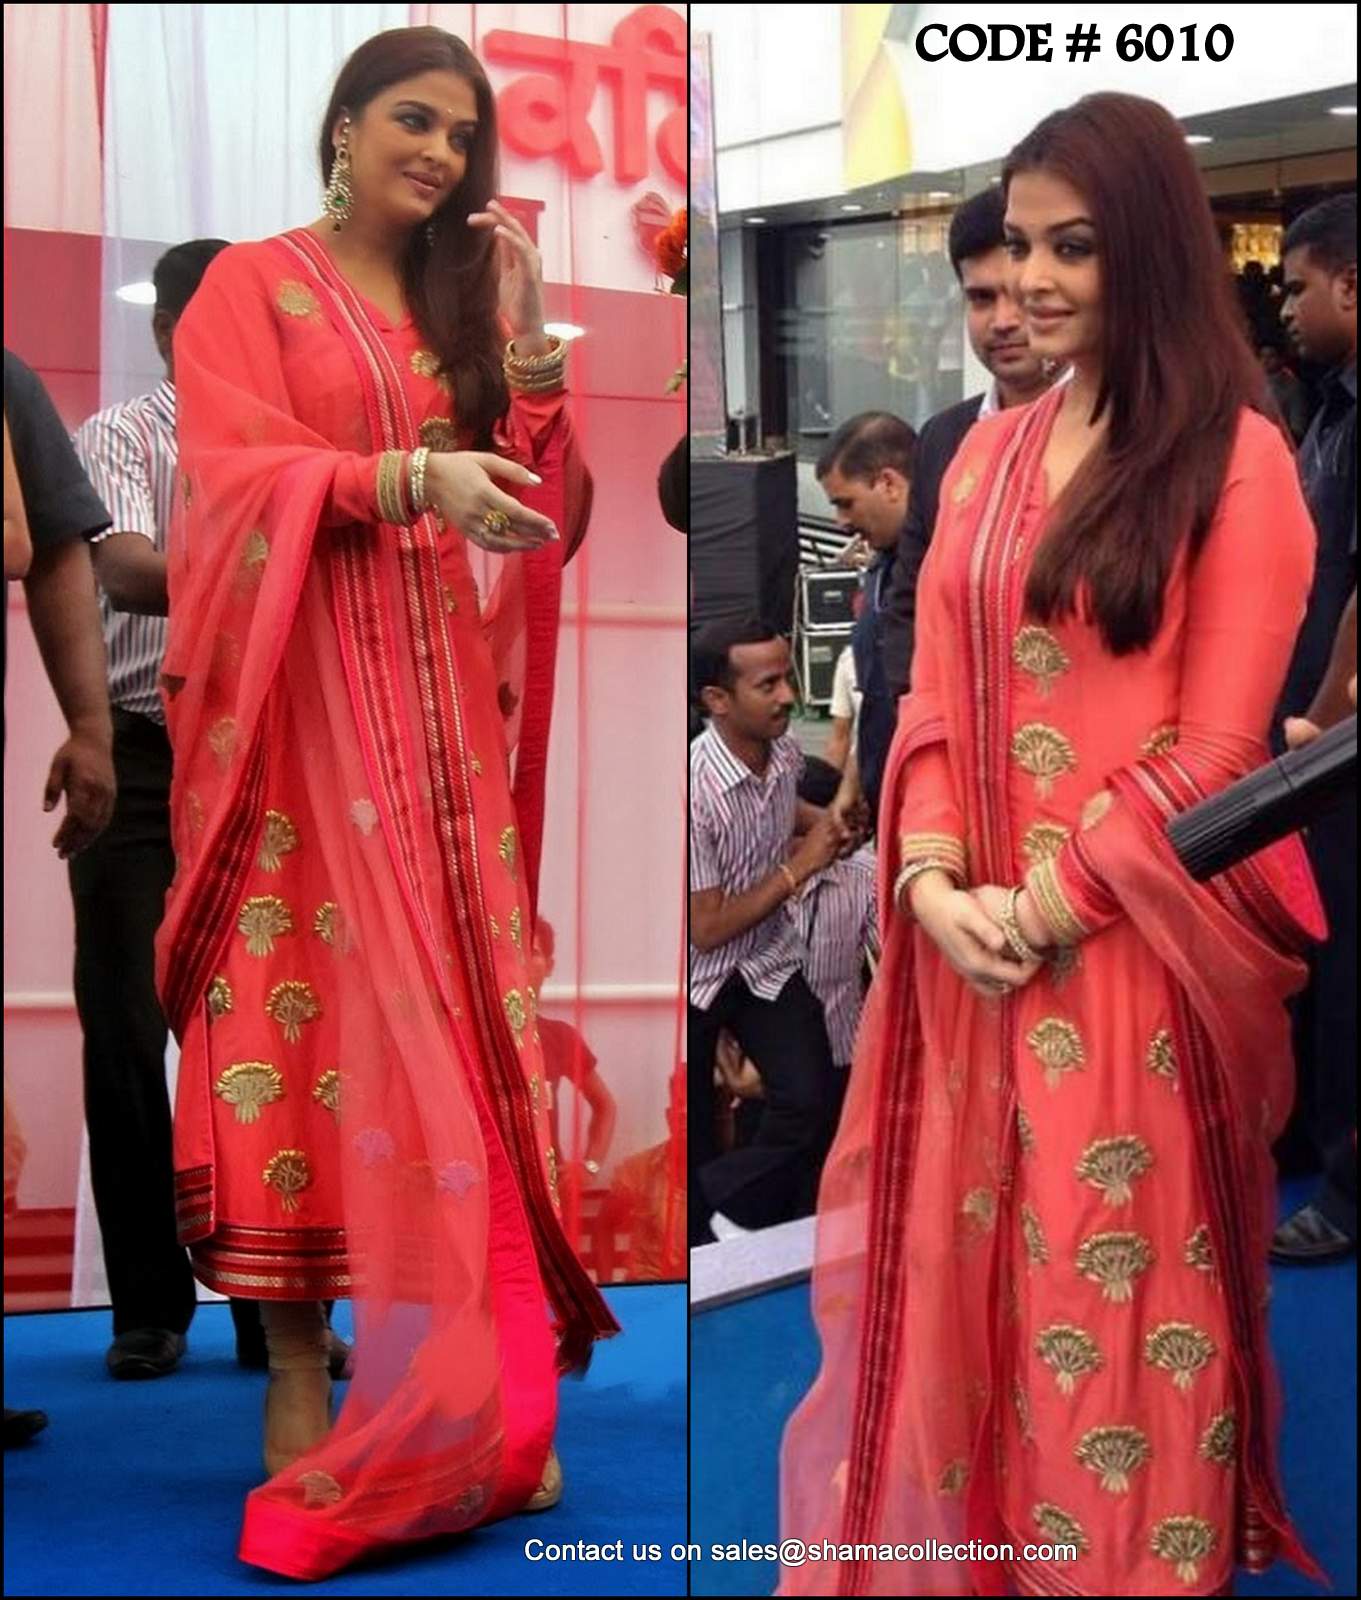 Gorgeous Gowns Worn By Aishwarya Rai Bachchan